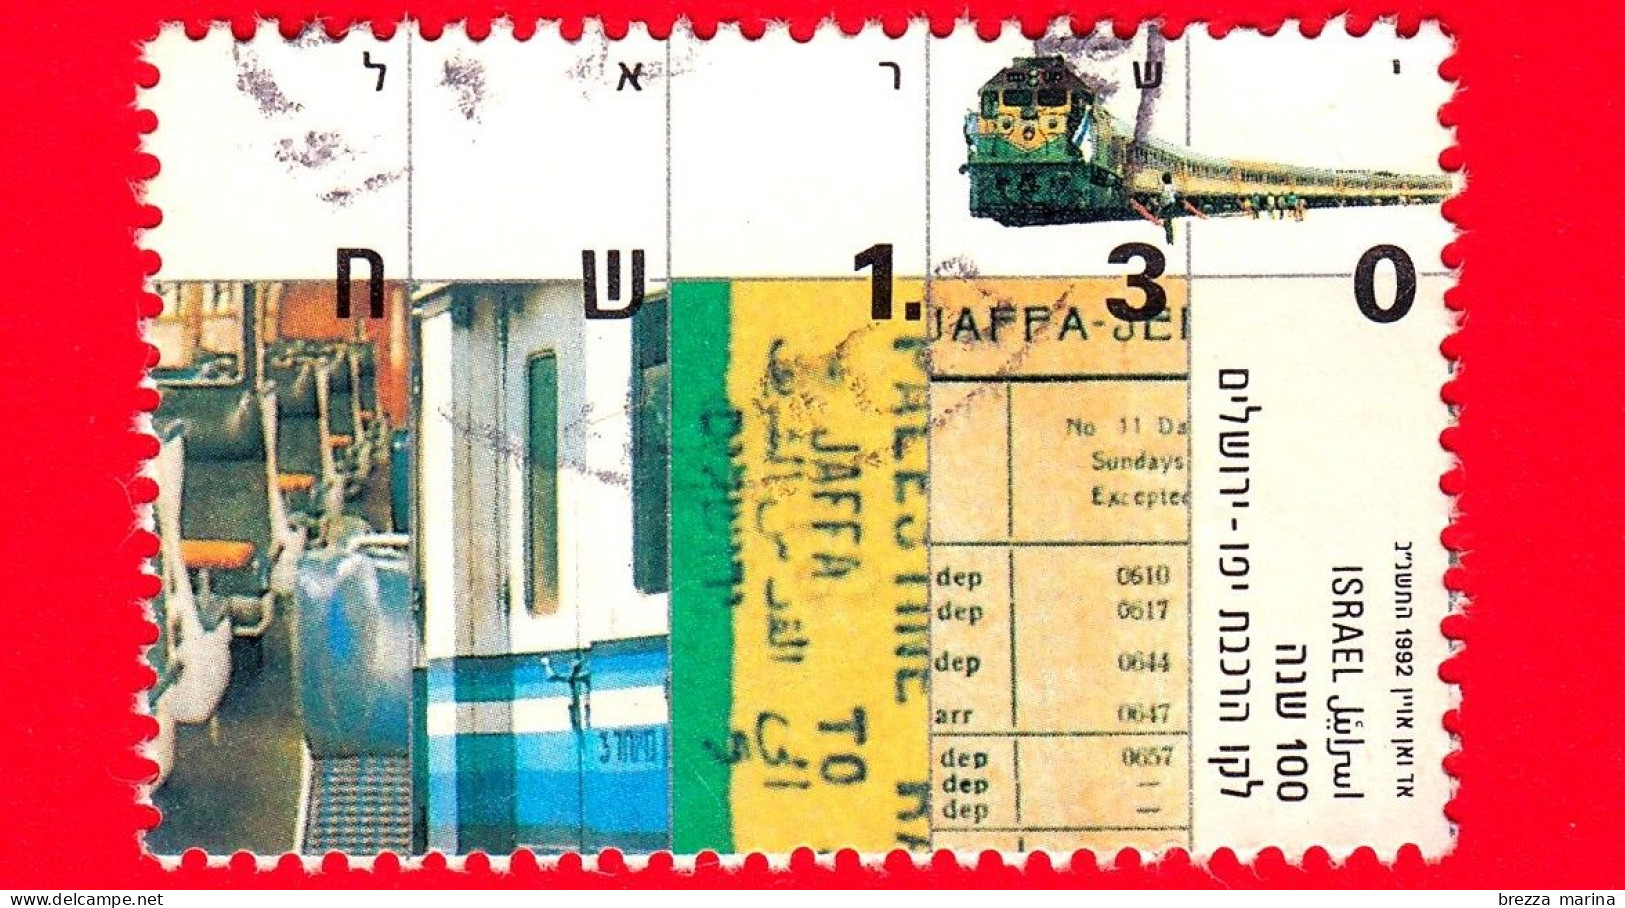 ISRAELE - Usato - 1992 - Centenario Della Linea Ferroviaria Jaffa-Gerusalemme - Locomotiva Diesel - 1.30 - Used Stamps (without Tabs)